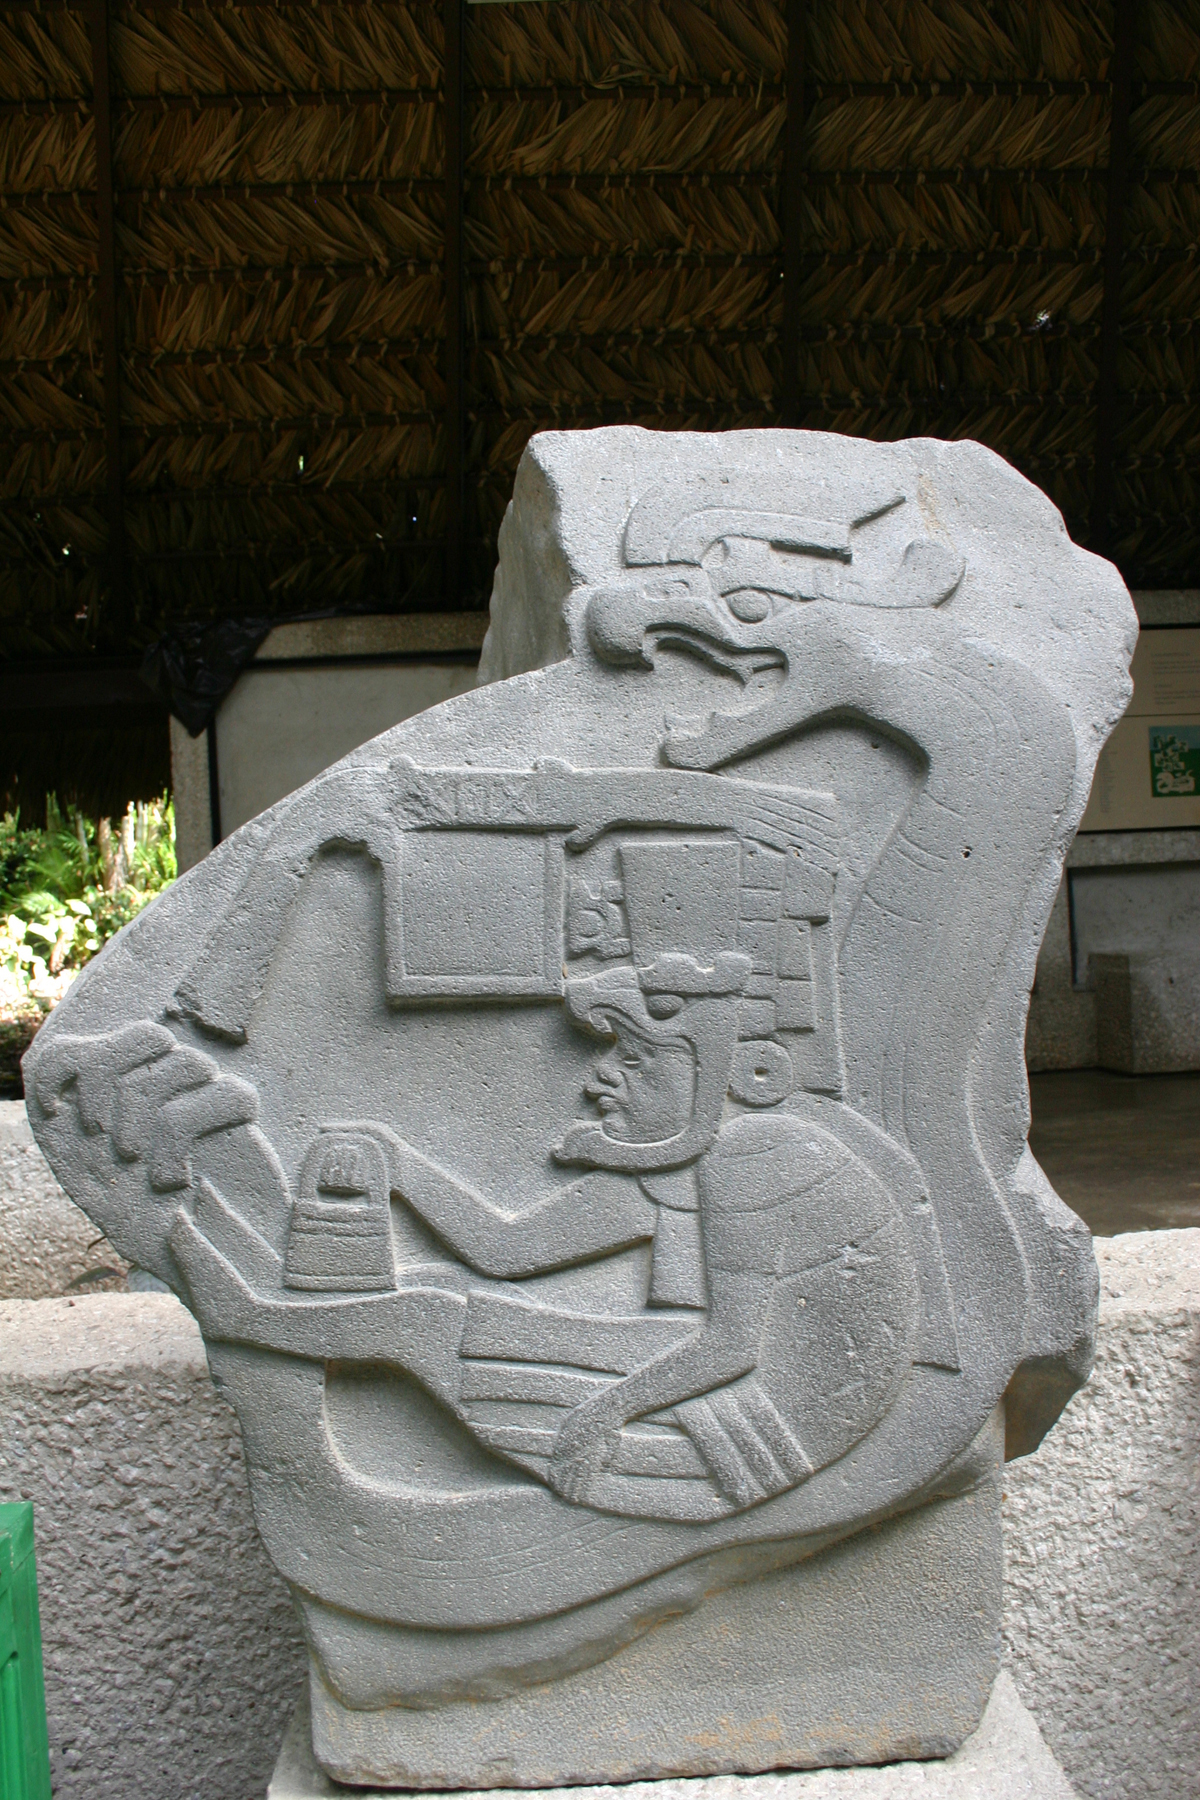 An example of Mesoamerican art.